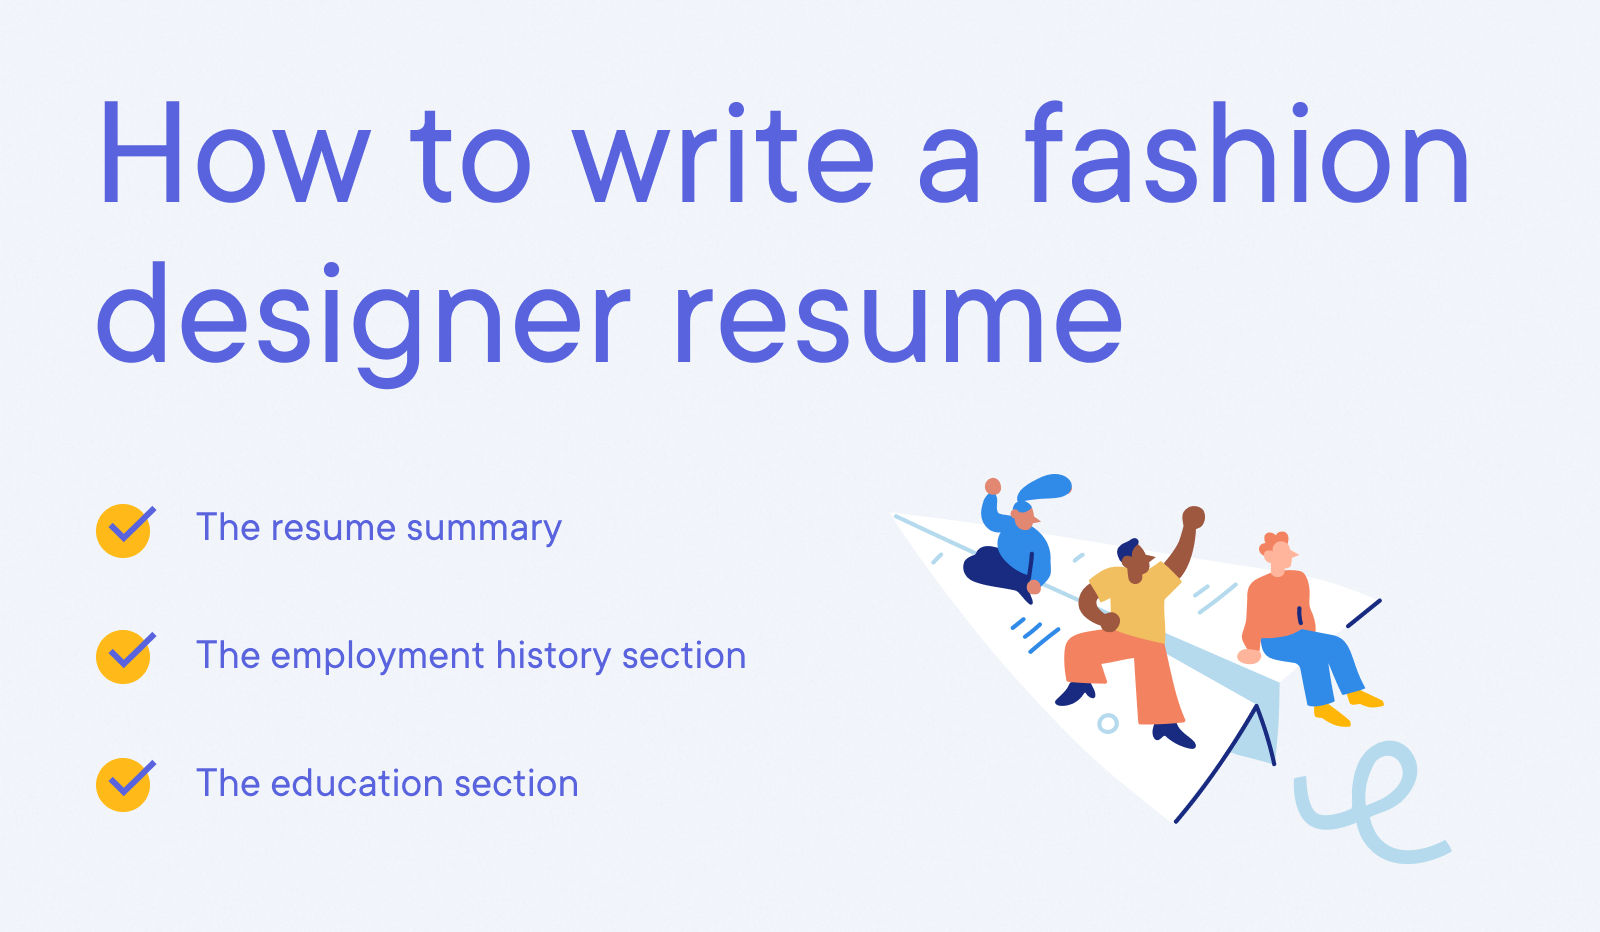 Fashion Designer - How to write a fashion designer resume